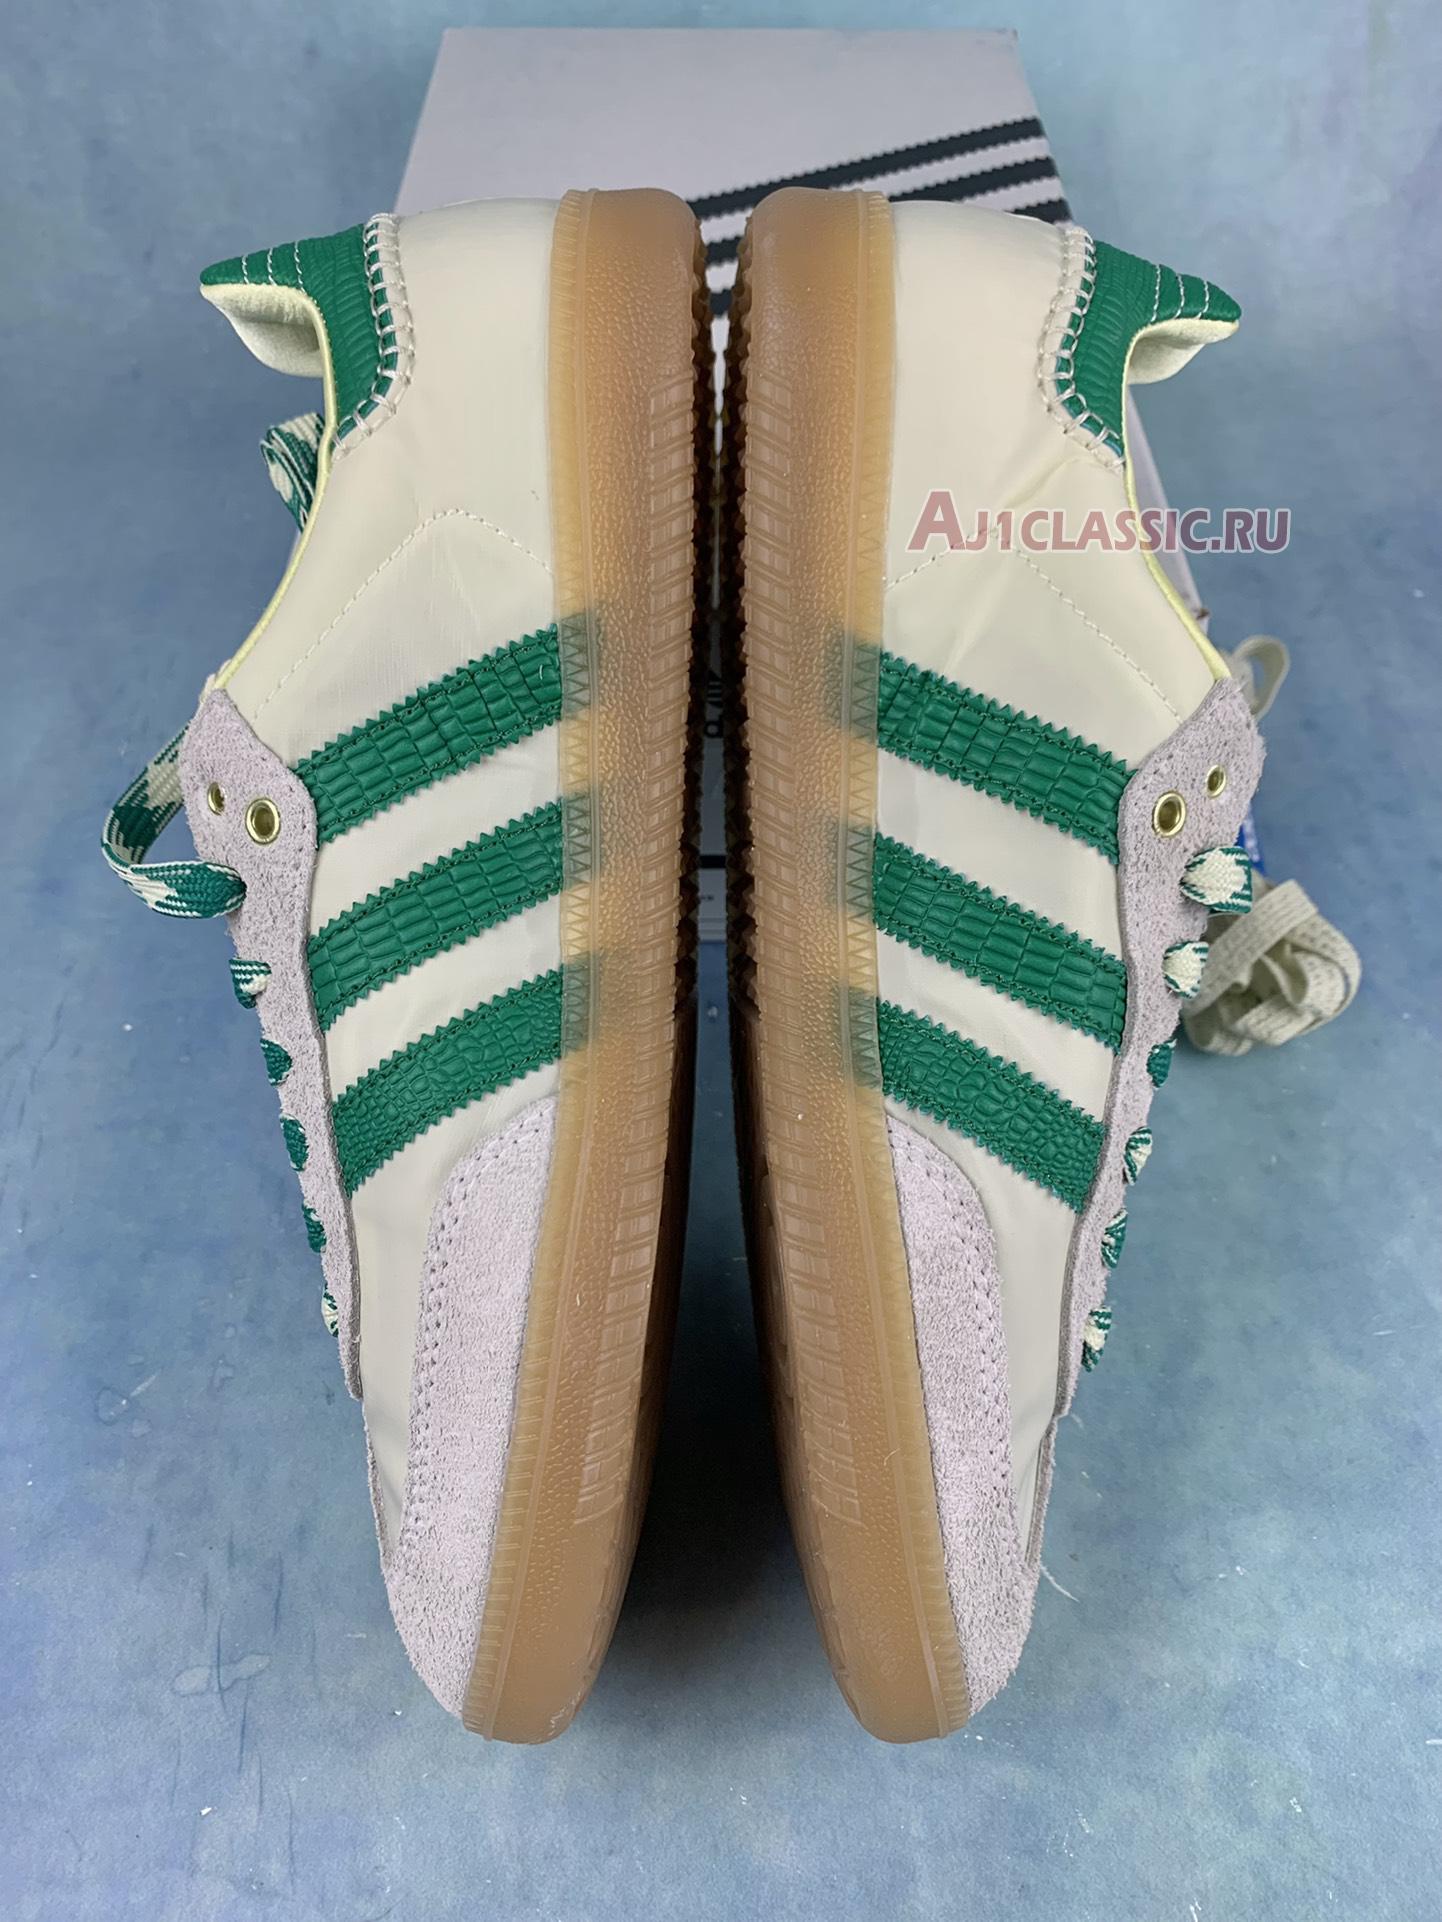 Wales Bonner x Adidas Samba "Cream White Bold Green" GY4344